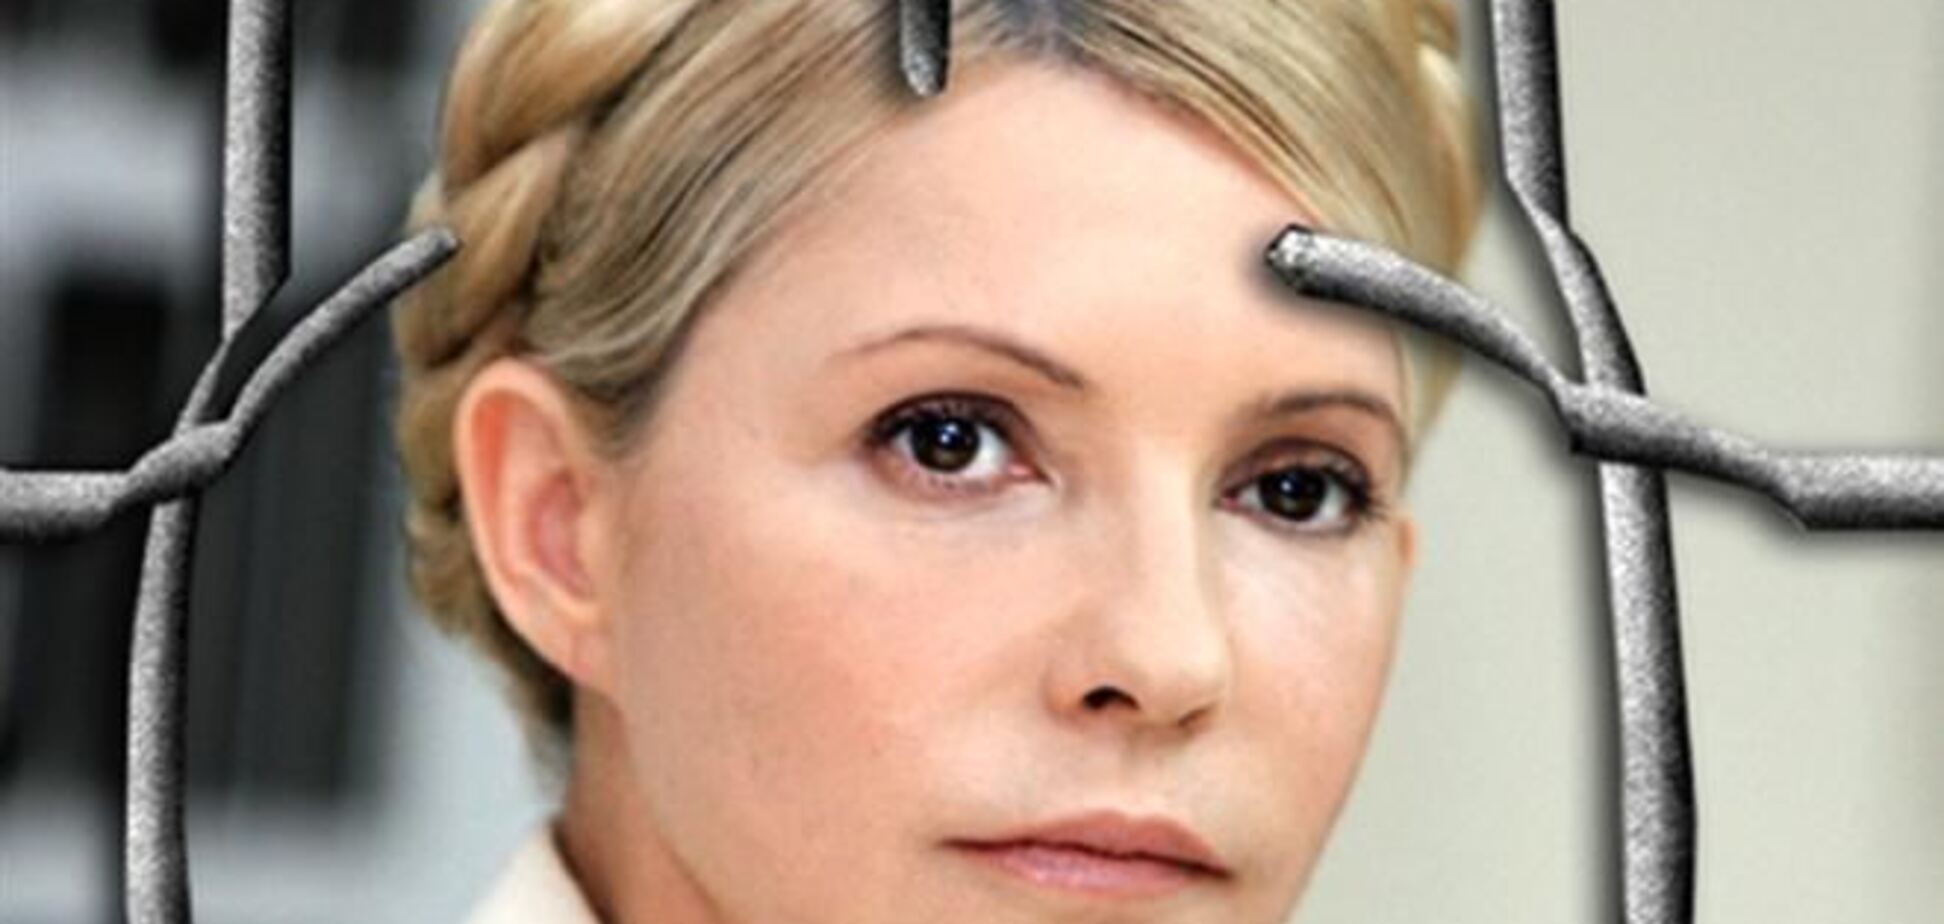 Тимошенко получит от тети на День рождения казака